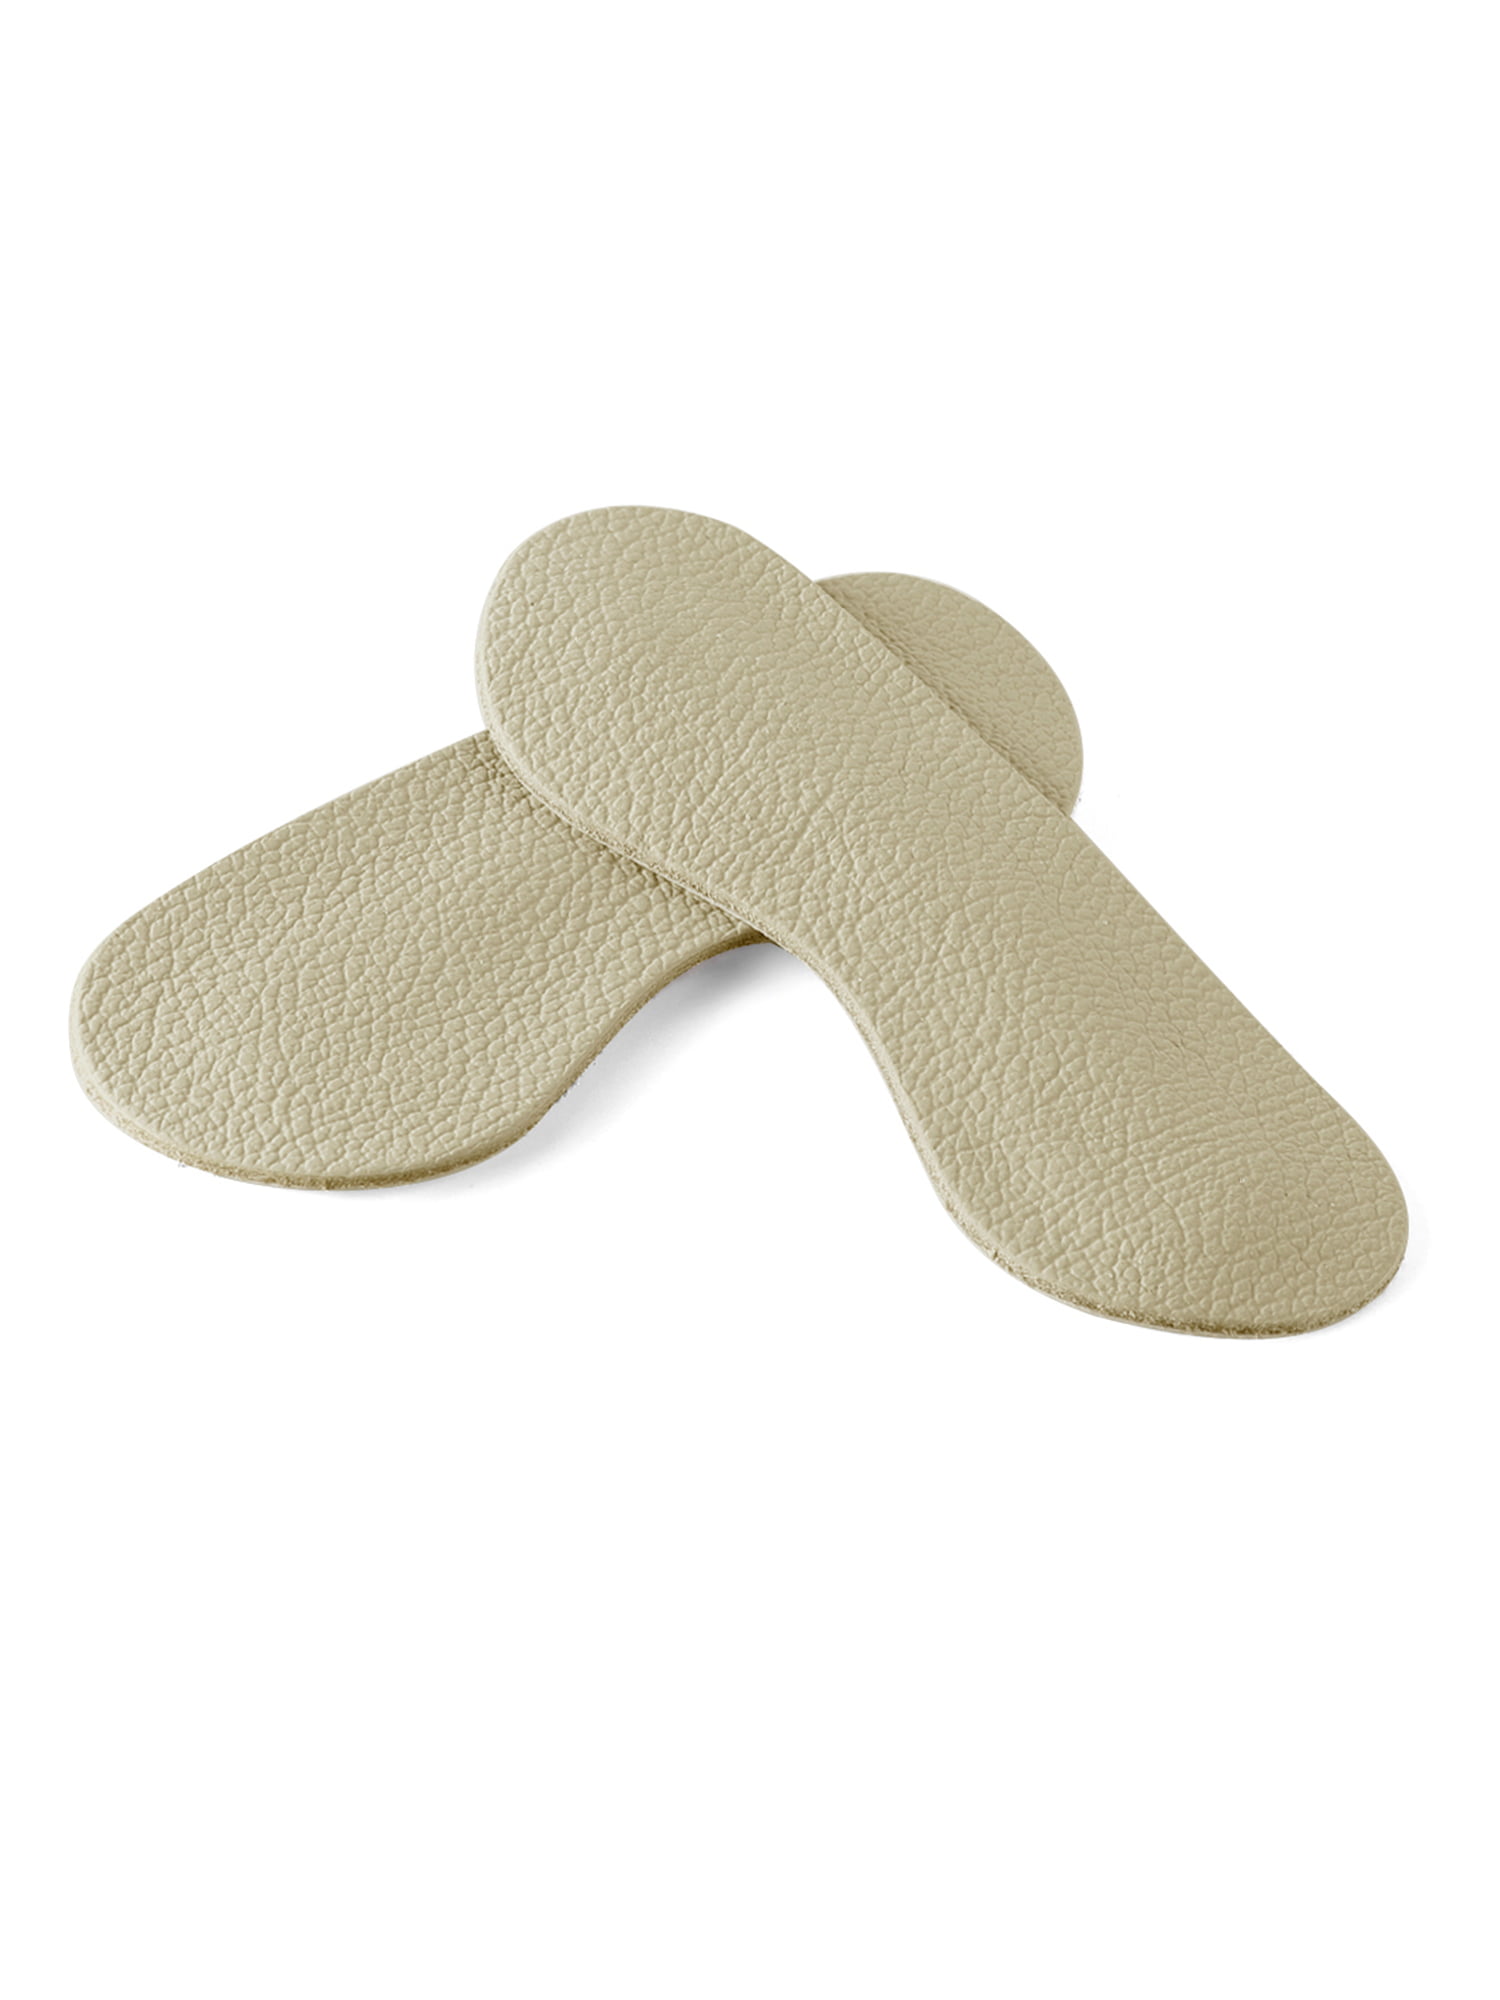 Allegra K Women's Leather Cushion Pad Heel Self-Adhesive Shoe Insole ...